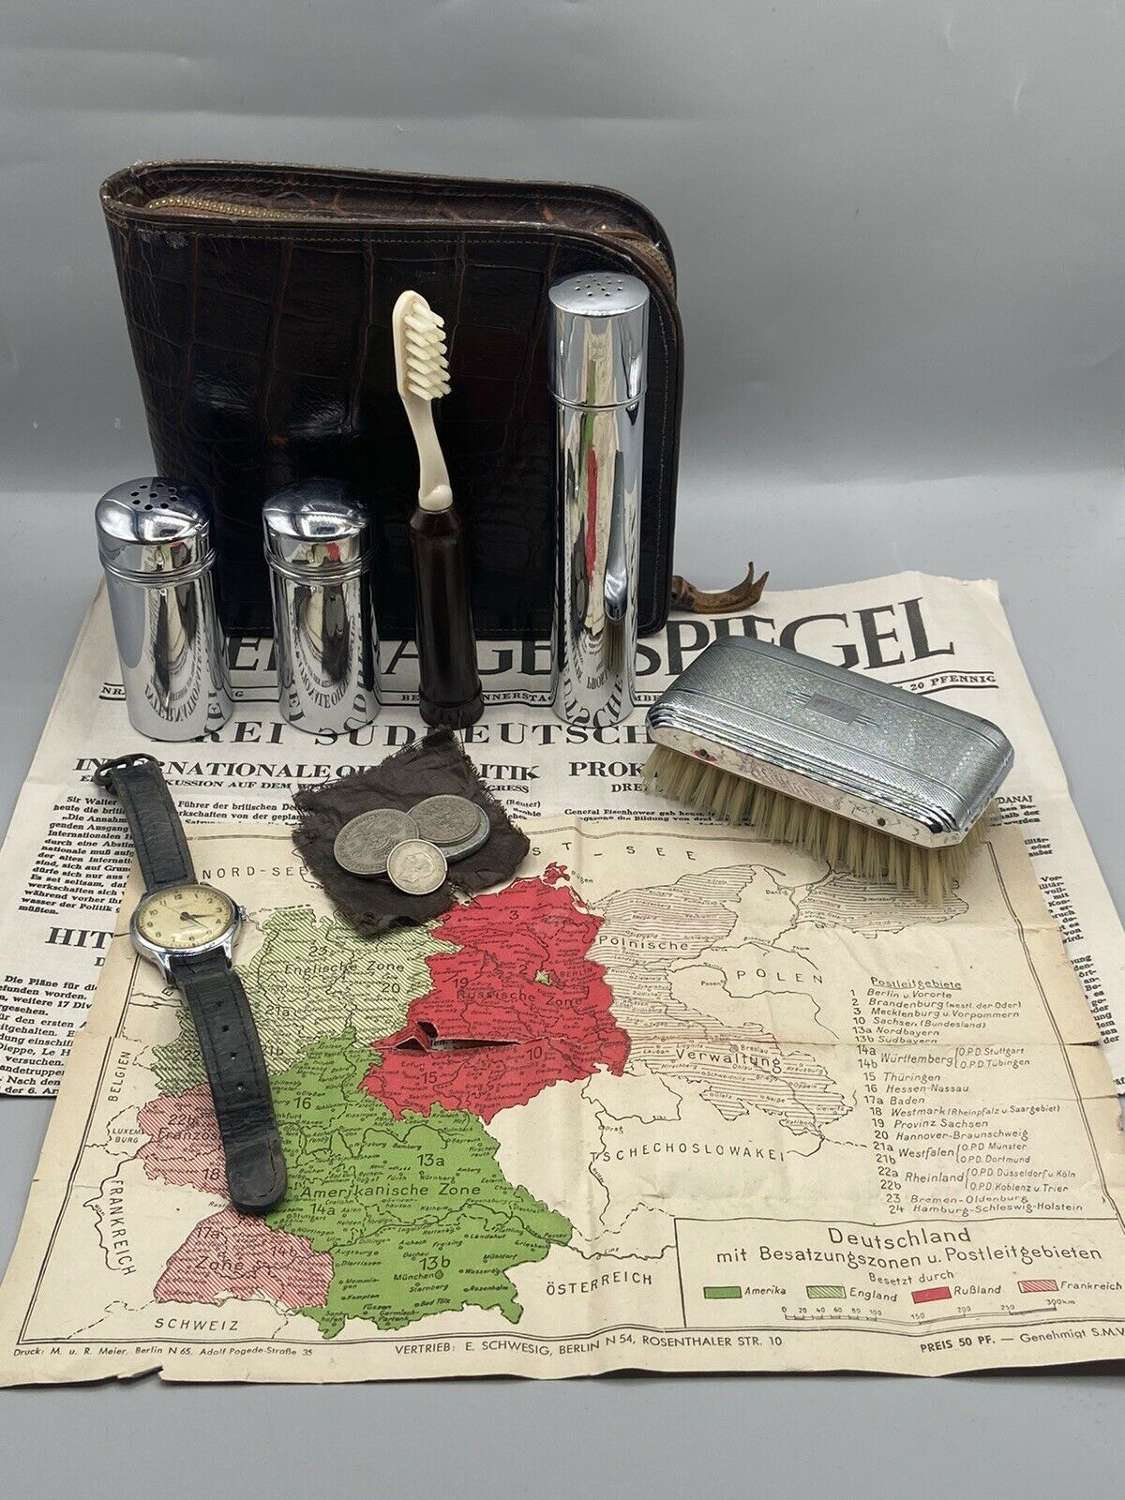 Post Ww2 German Zone Travel Escape Kit Vanity Kit, Ingersol Watch Etc